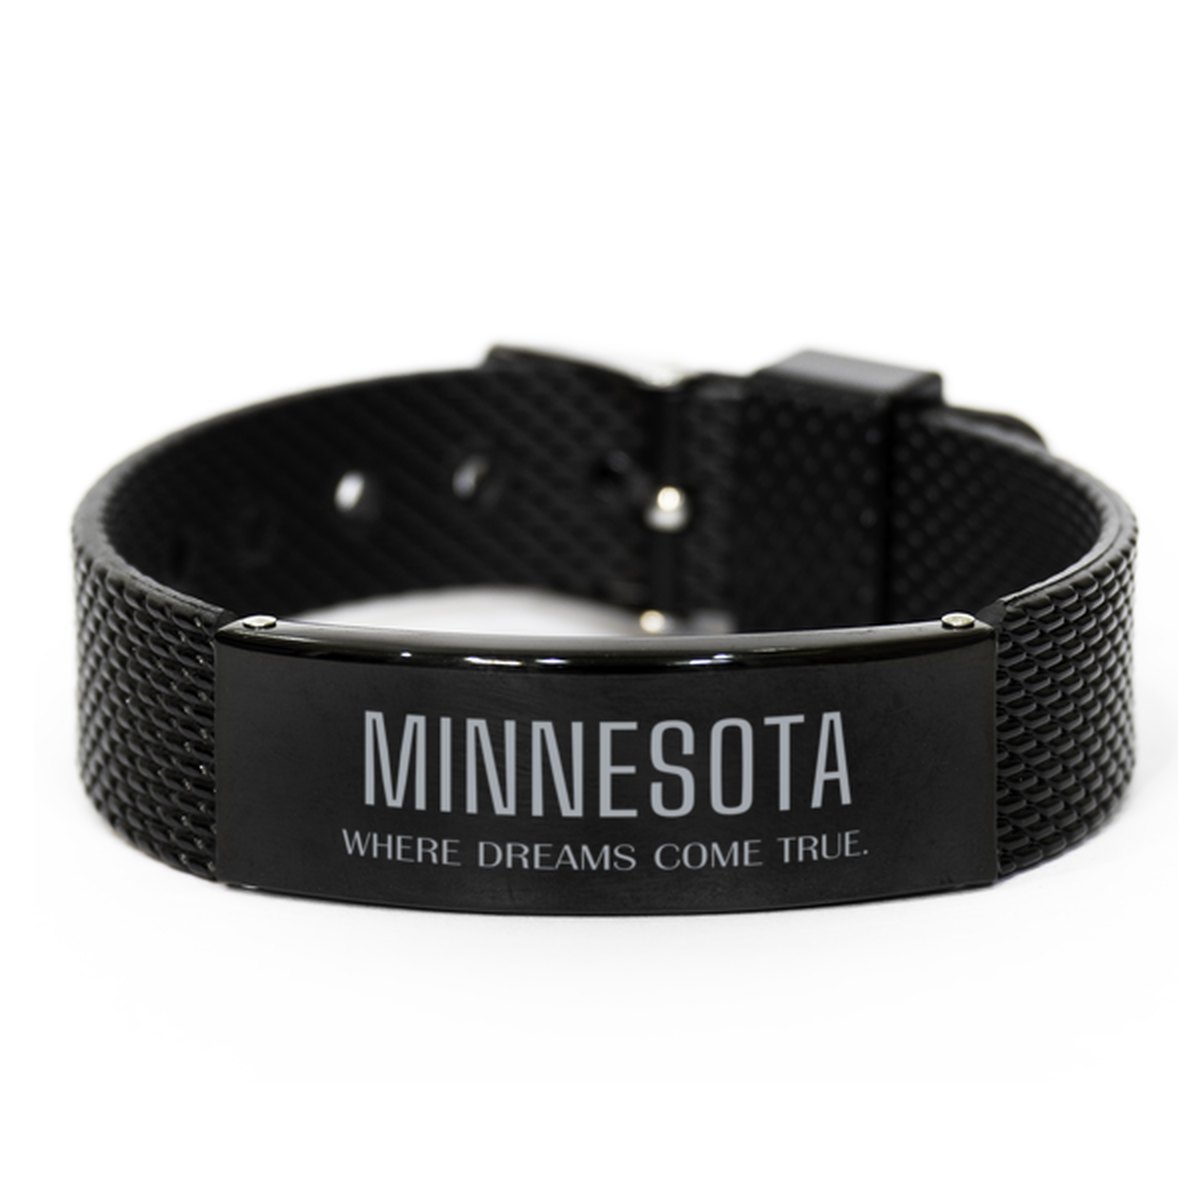 Love Minnesota State Black Shark Mesh Bracelet, Minnesota Where dreams come true, Birthday Inspirational Gifts For Minnesota Men, Women, Friends